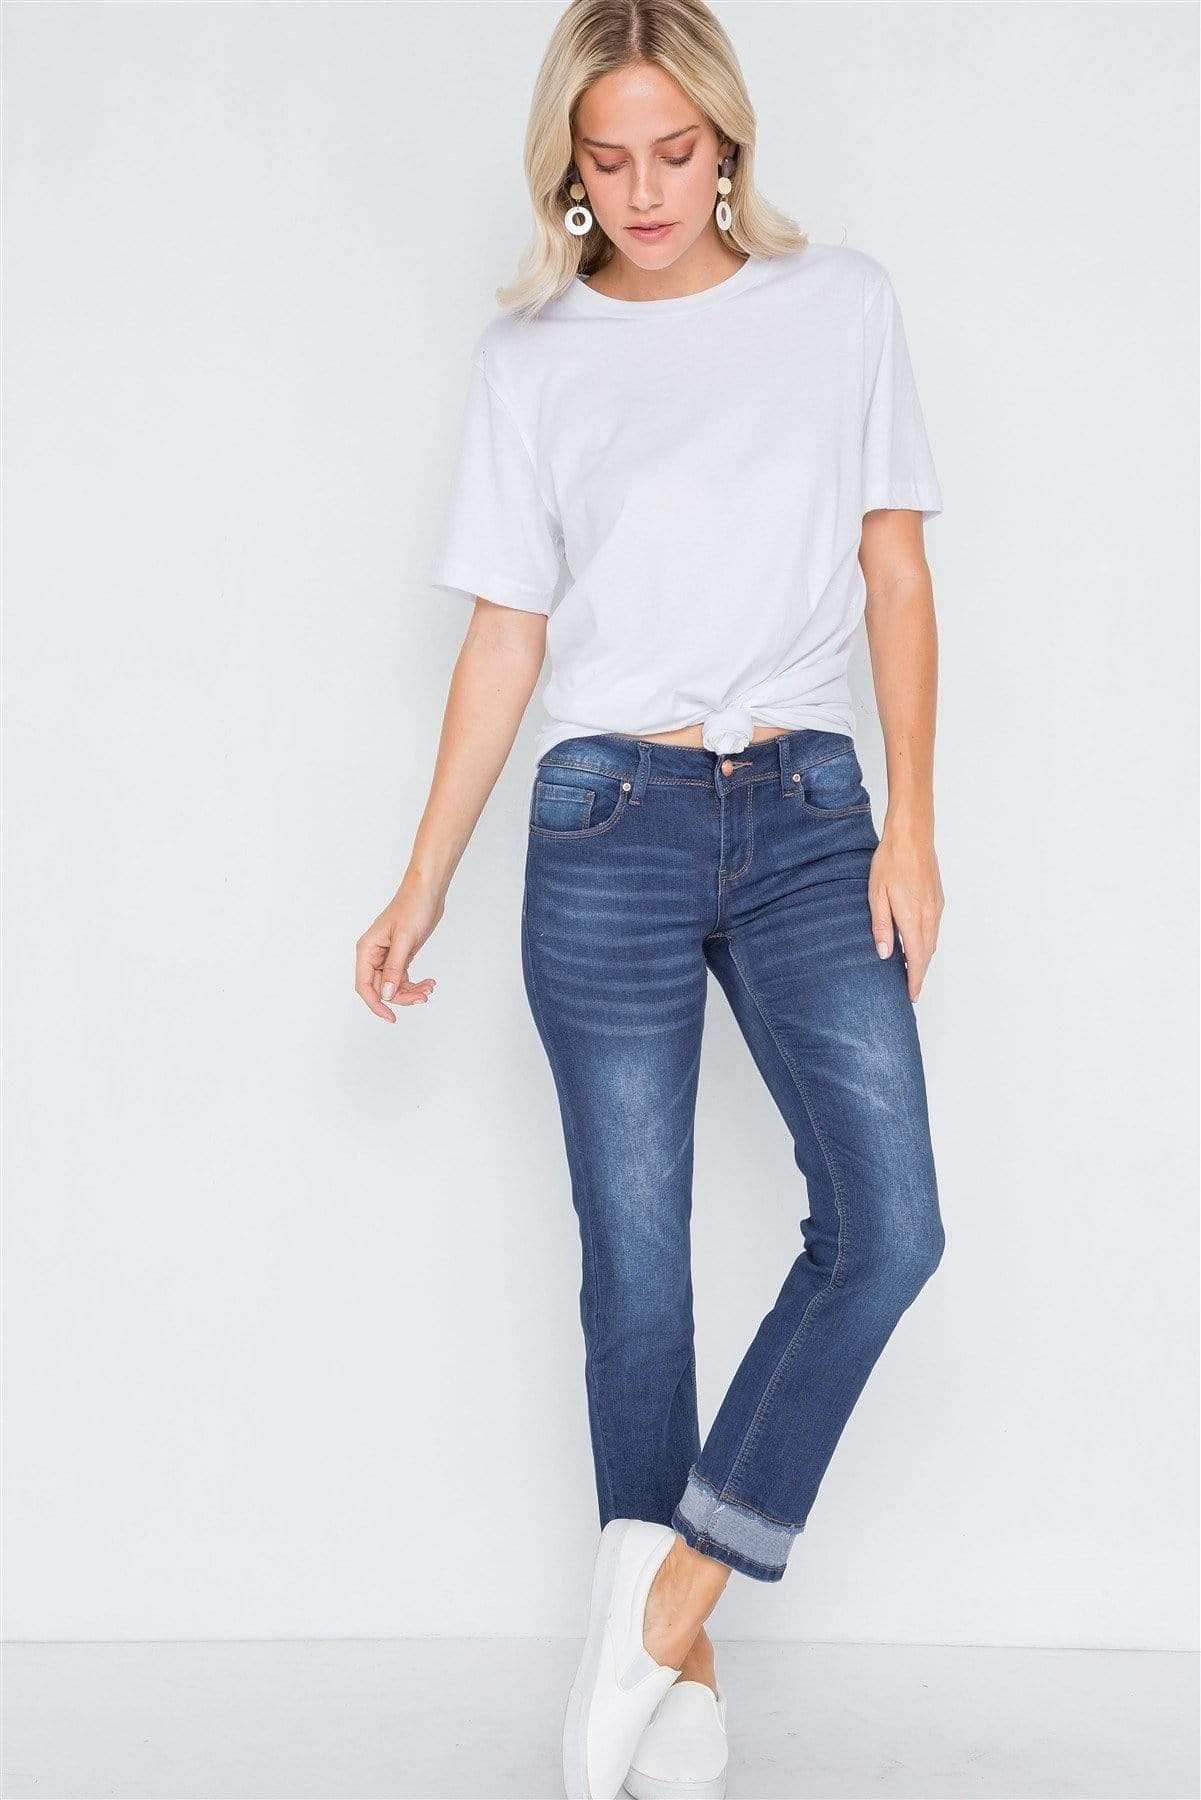 Medium Blue Mid-Rise Denim Jeans - Shopping Therapy, LLC jeans